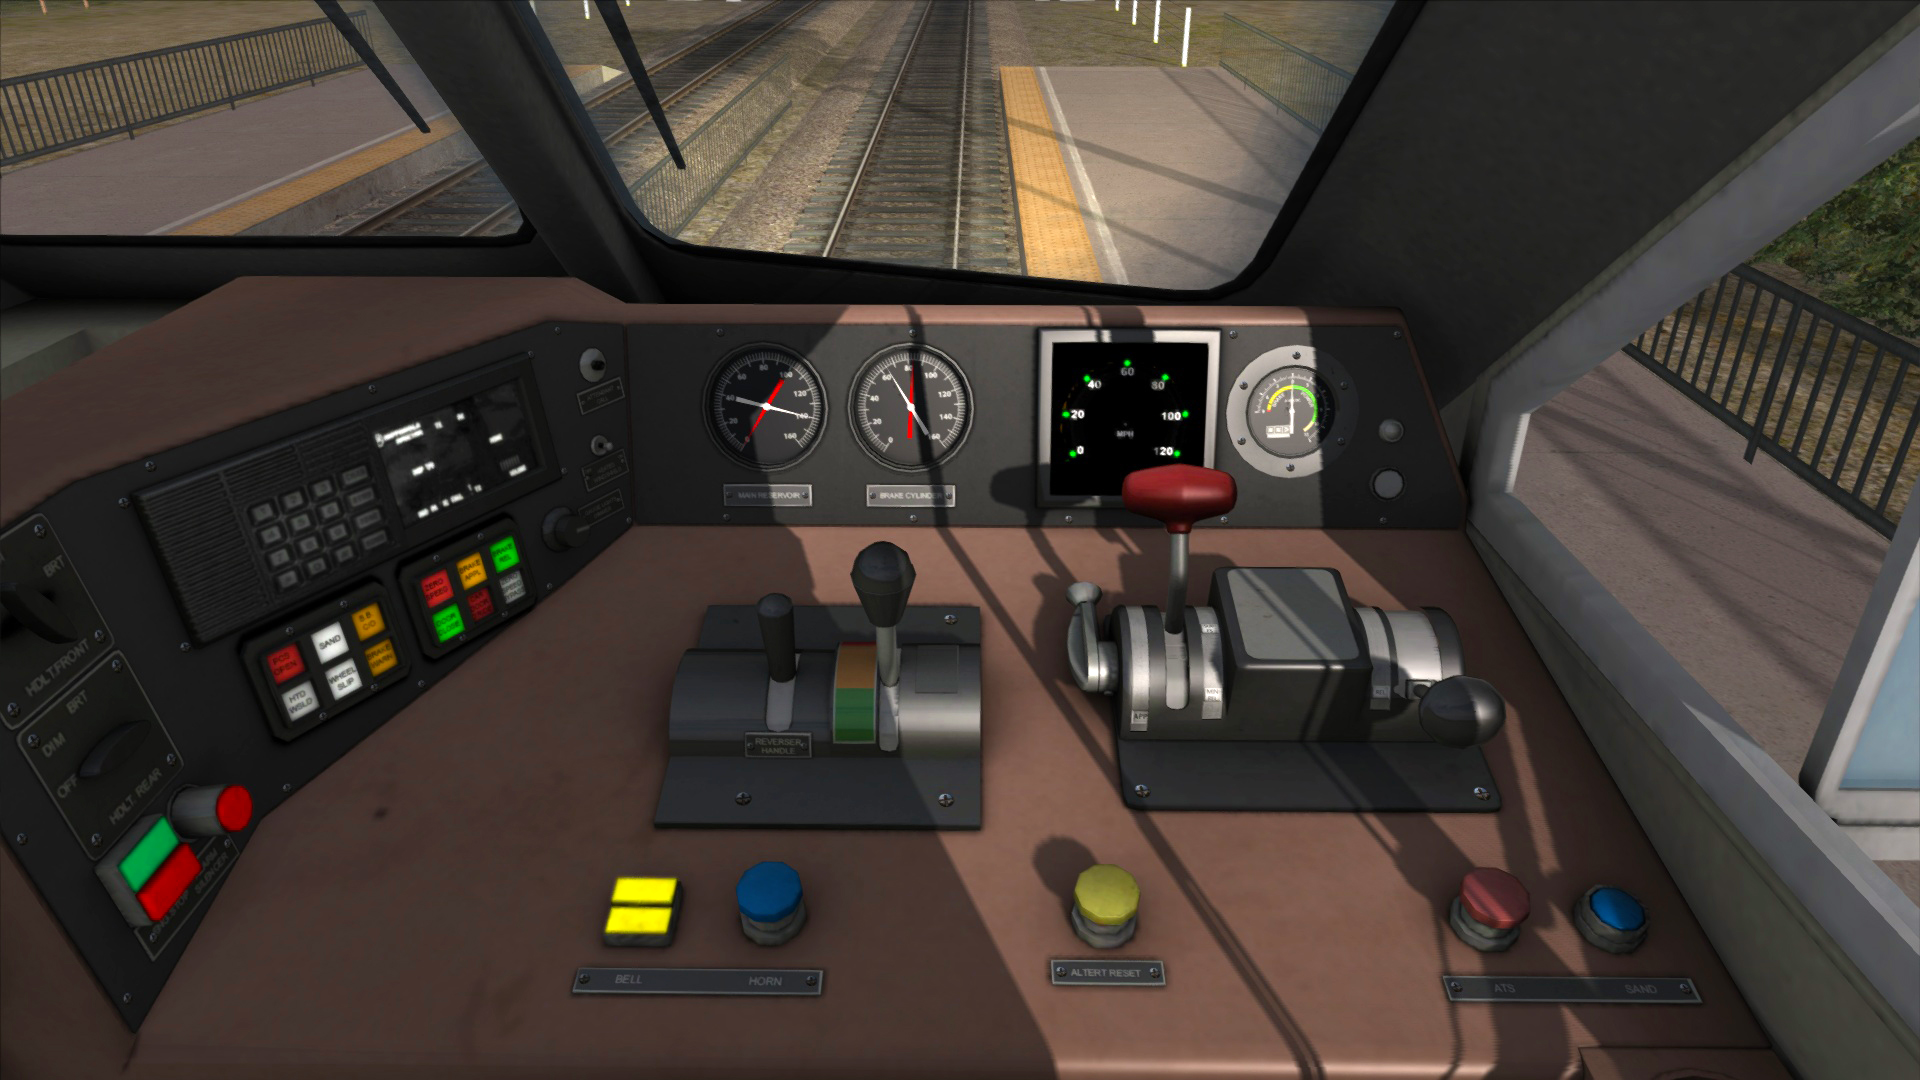 Train Simulator: Pacific Surfliner LA - San Diego Route screenshot